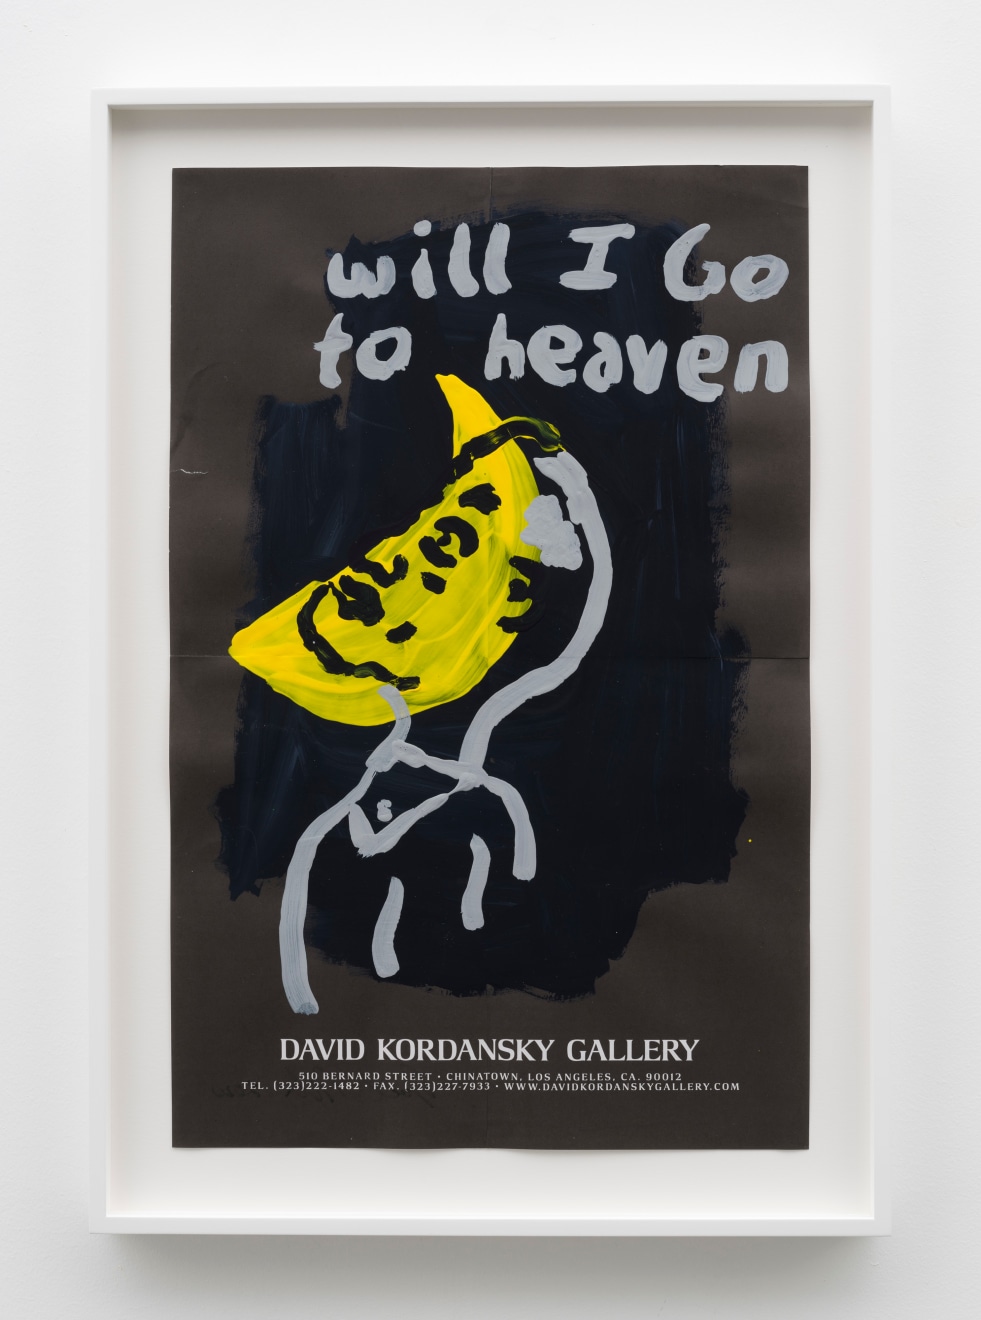 Joel Mesler, Untitled (Will I Go to Heaven), 2020